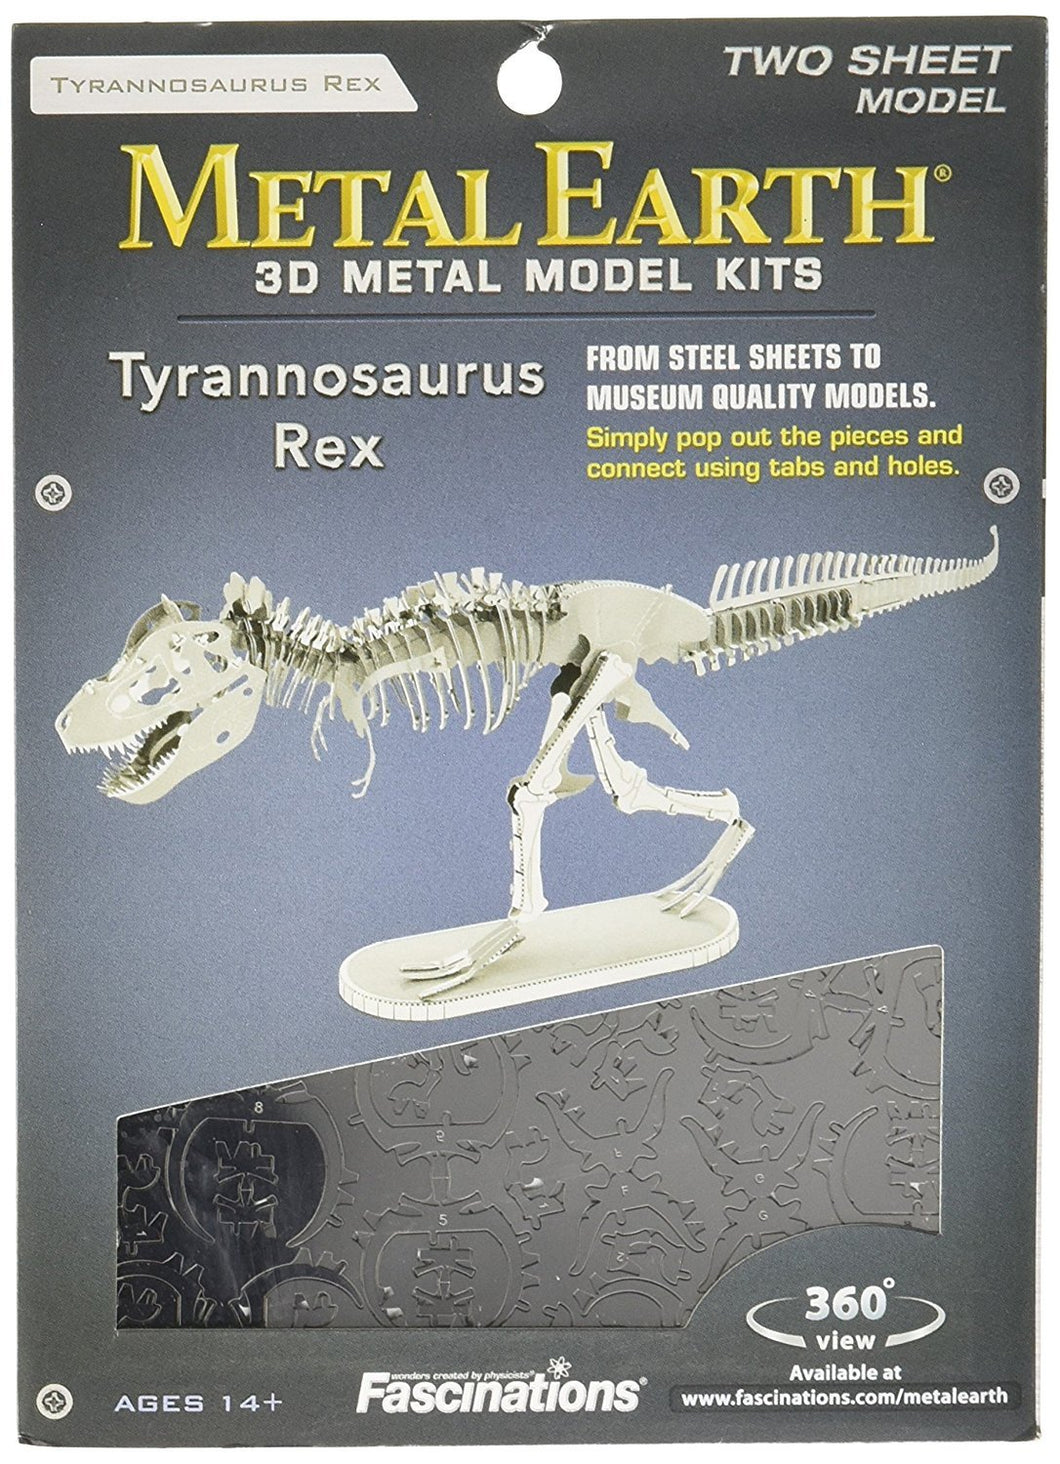 Metal Earth Tyrannosaurus Rex Skeleton 3D Metal Model Kit - Freedom Day Sales